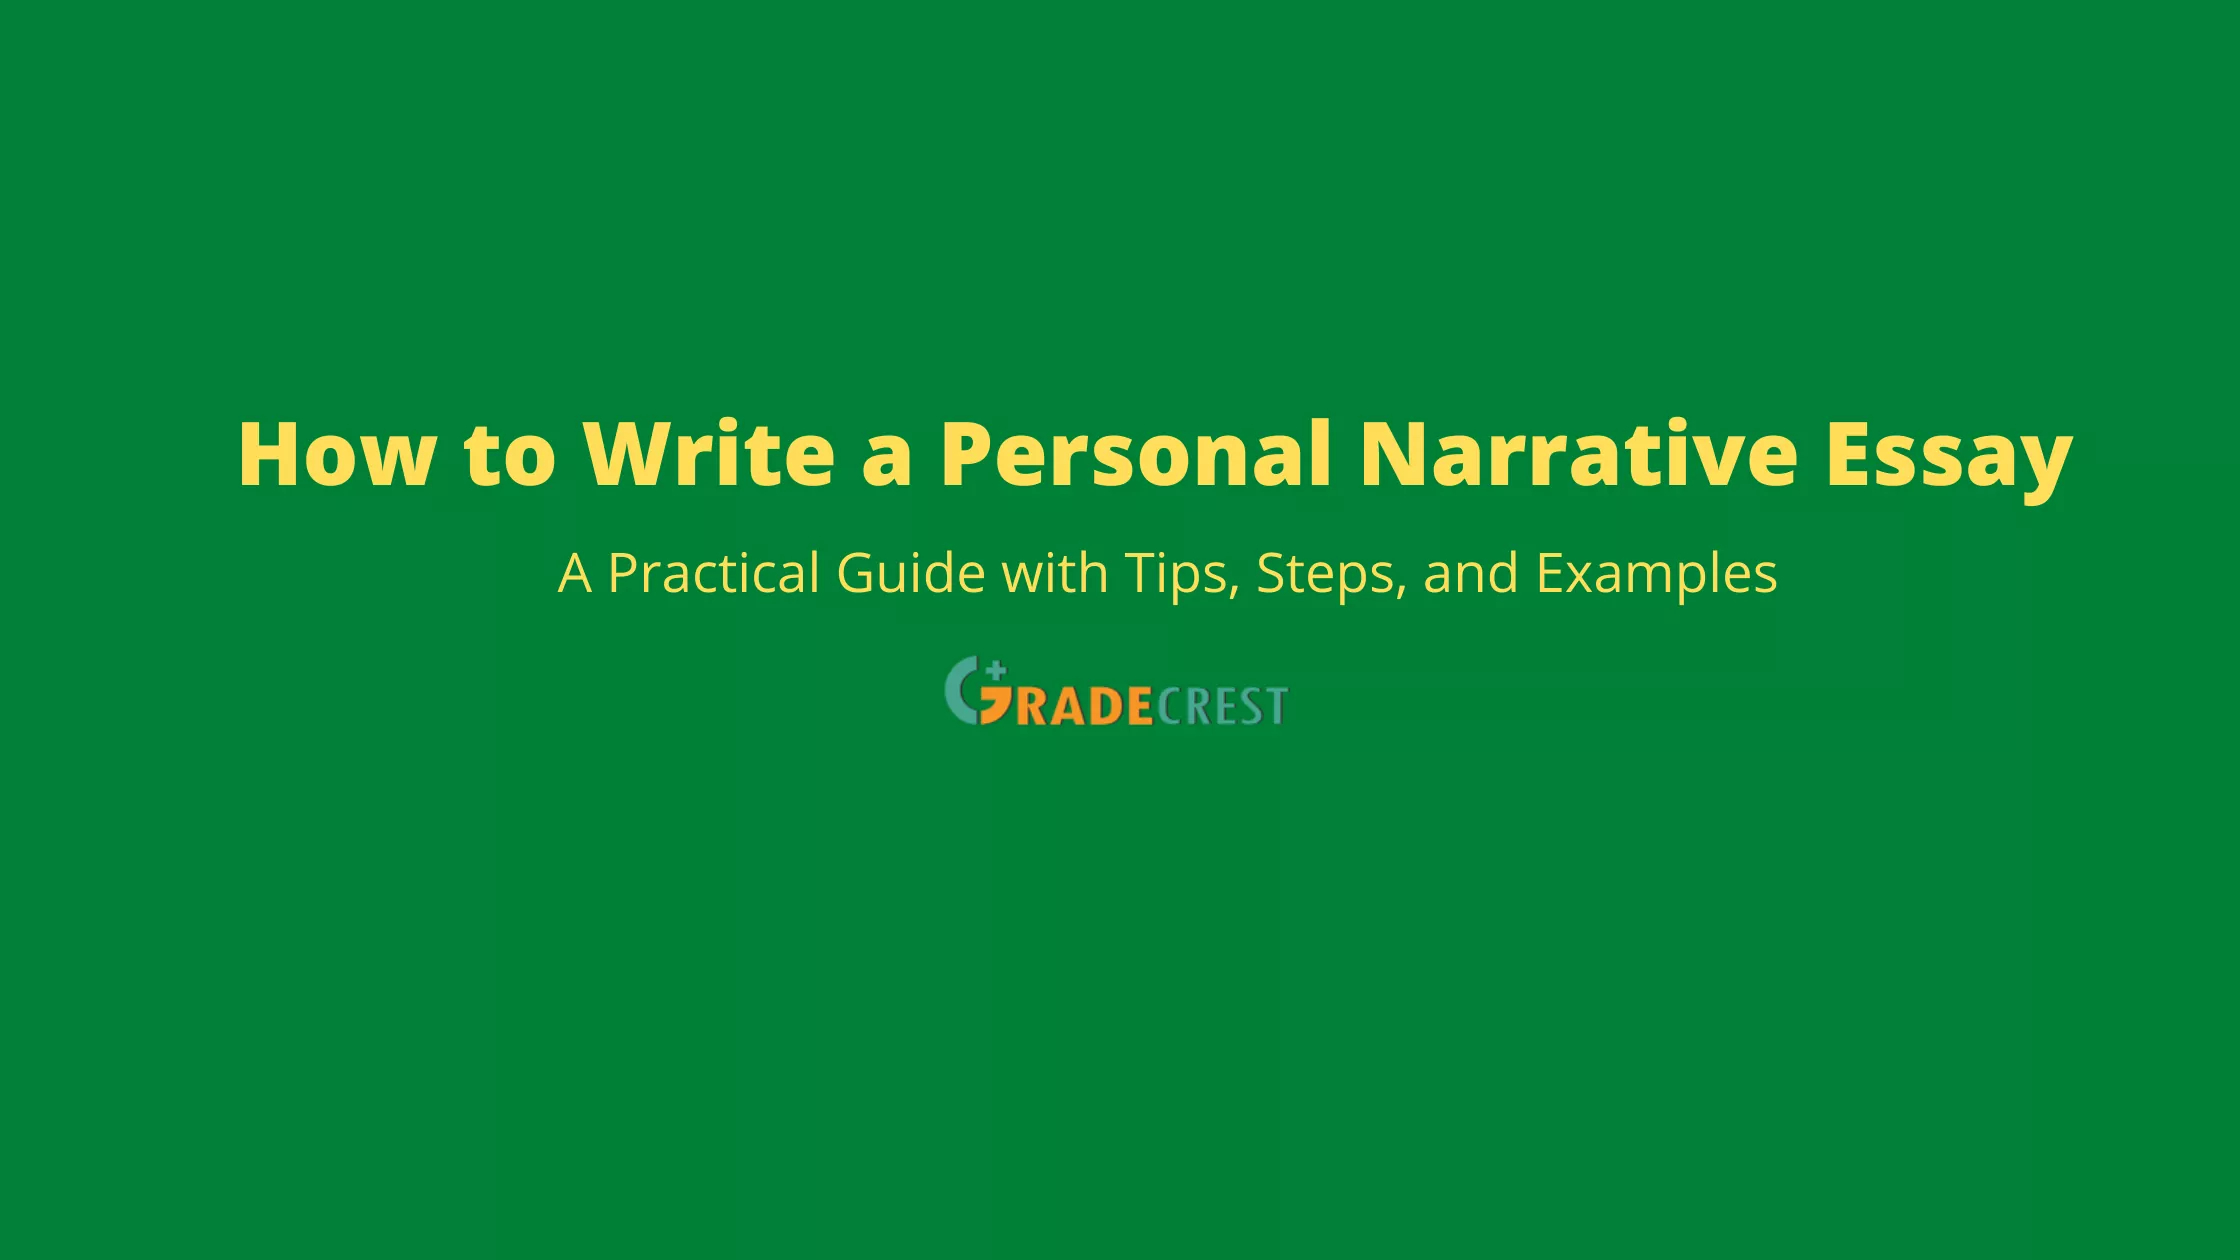 Personal Narrative Essay Guide